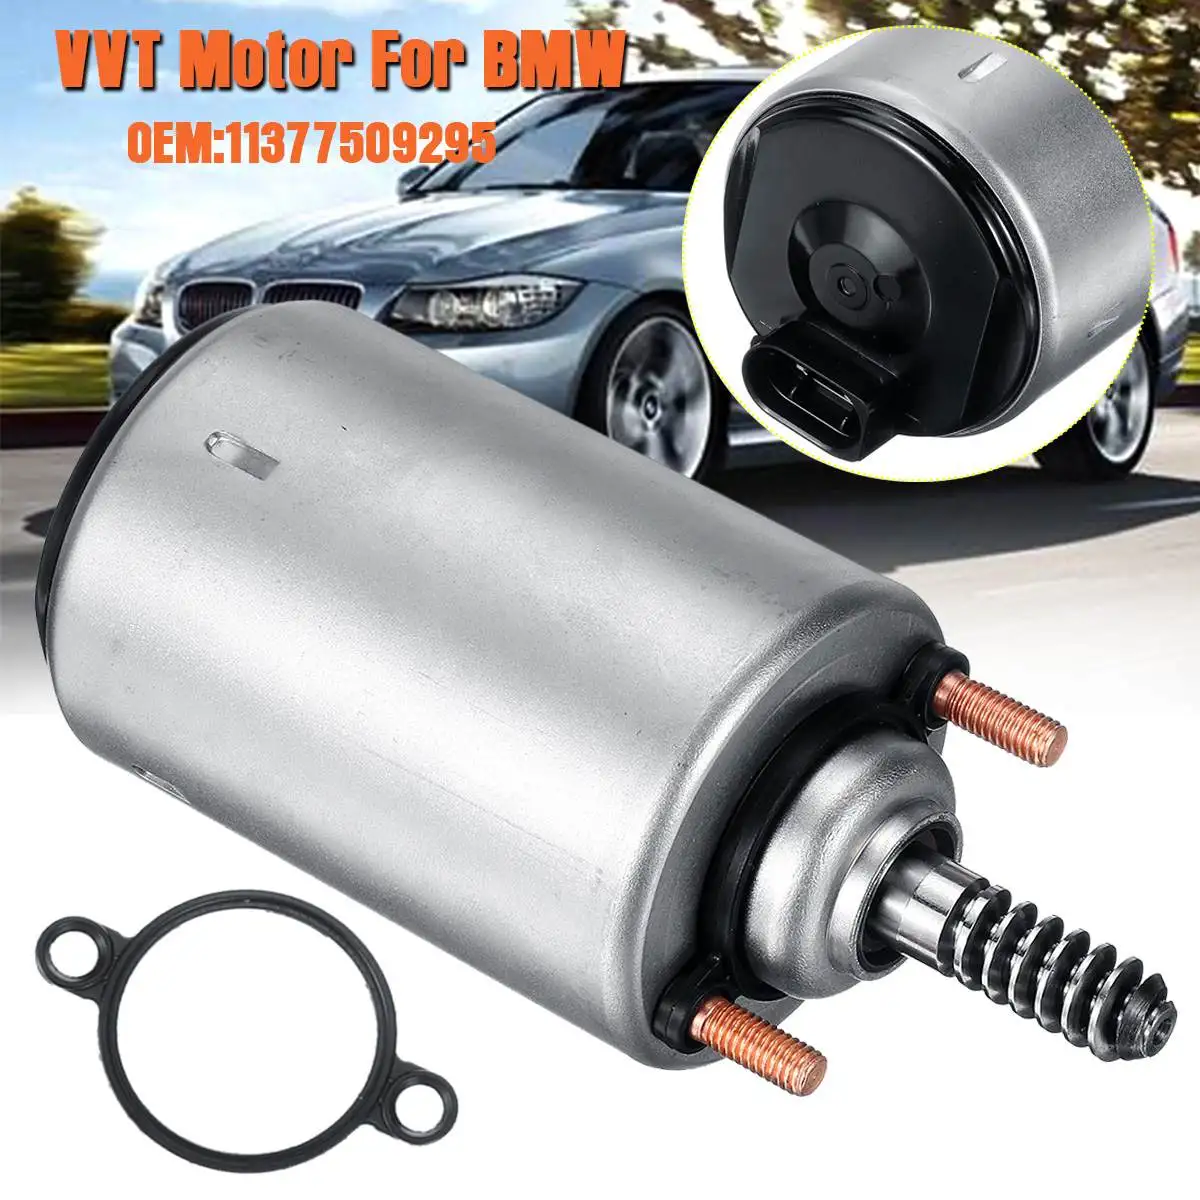 VVT валветронный Серводвигатель привод переменный клапан 11377509295 A2C59515104 7548387 для BMW 1 3 E46 X1 X3